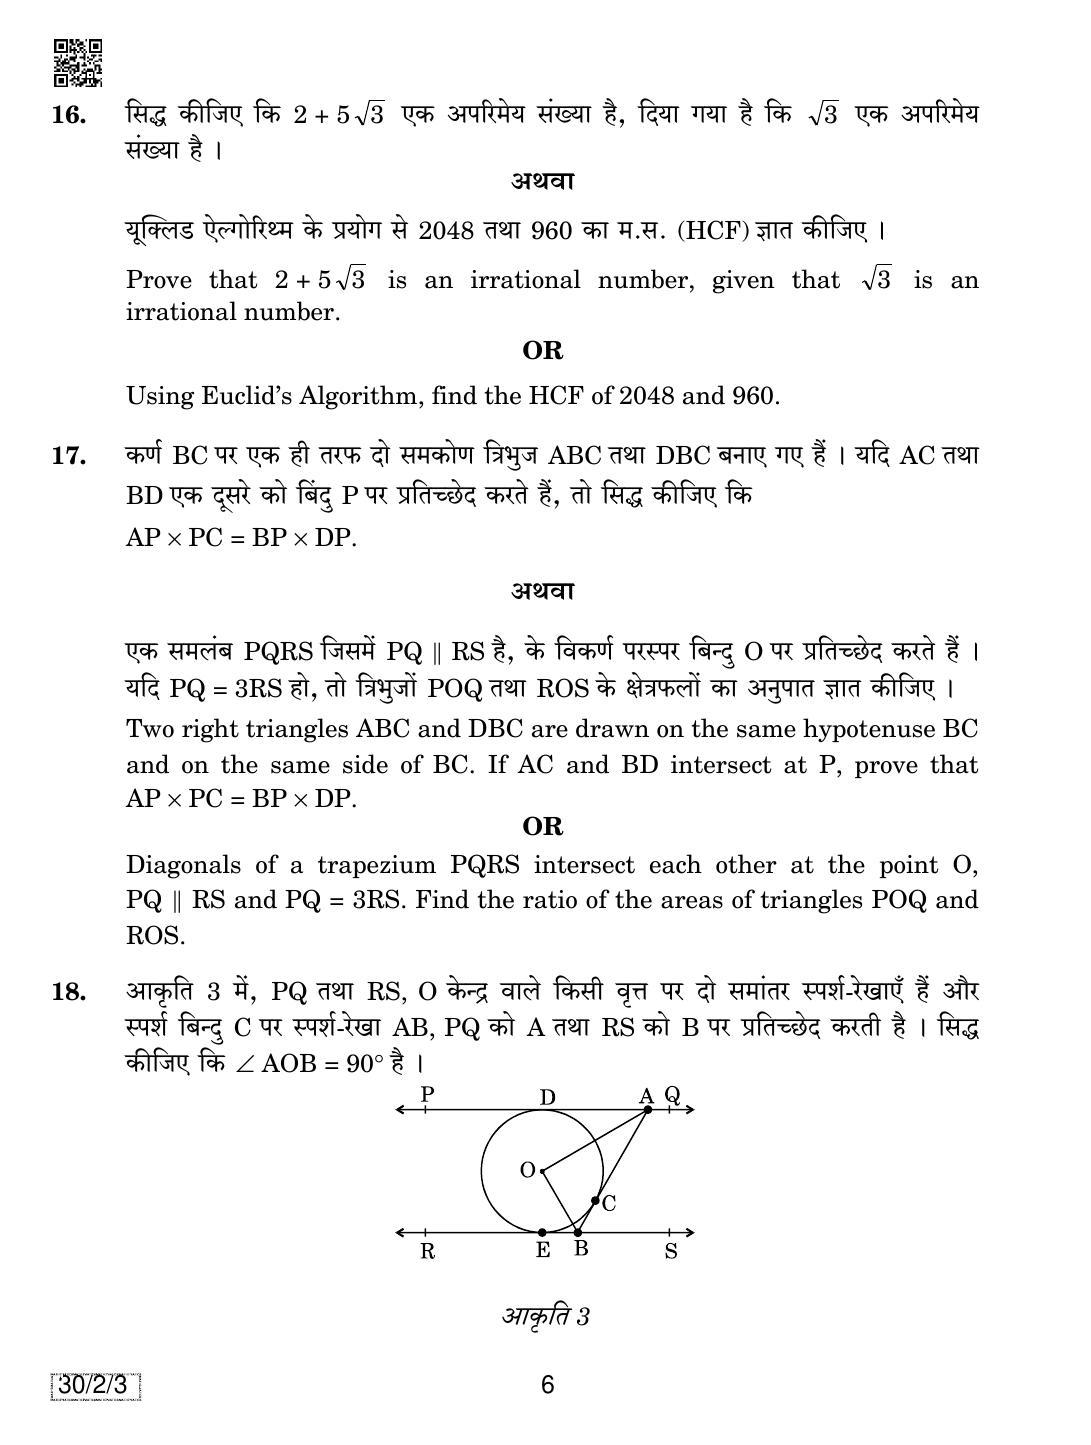 CBSE Class 10 Maths (30/2/3 - SET 3) 2019 Question Paper - Page 6